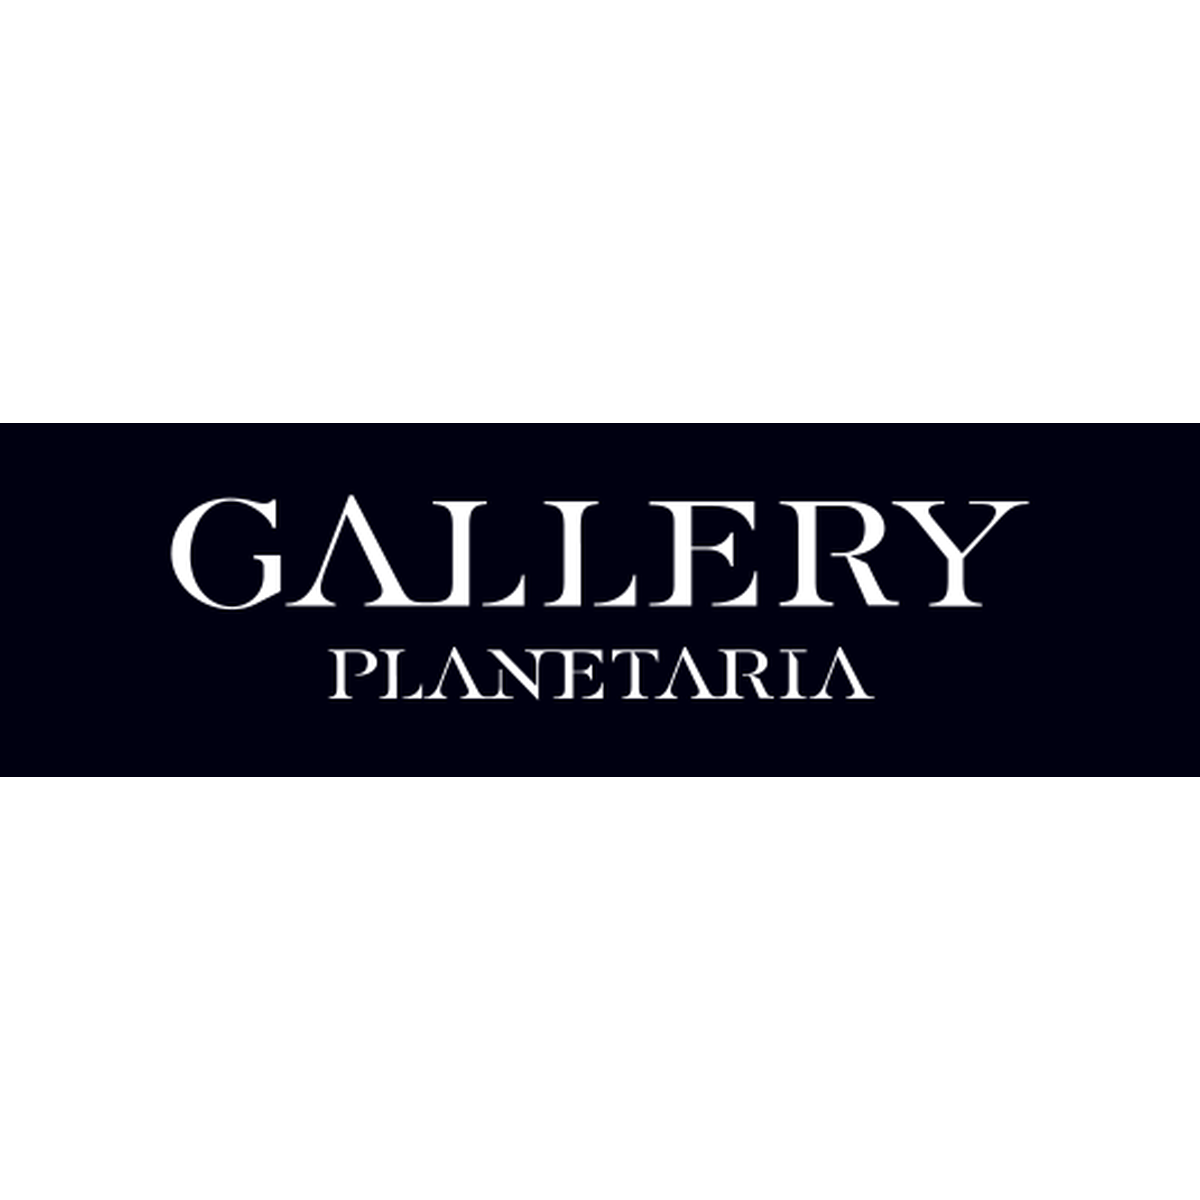 Gallery Planetaria